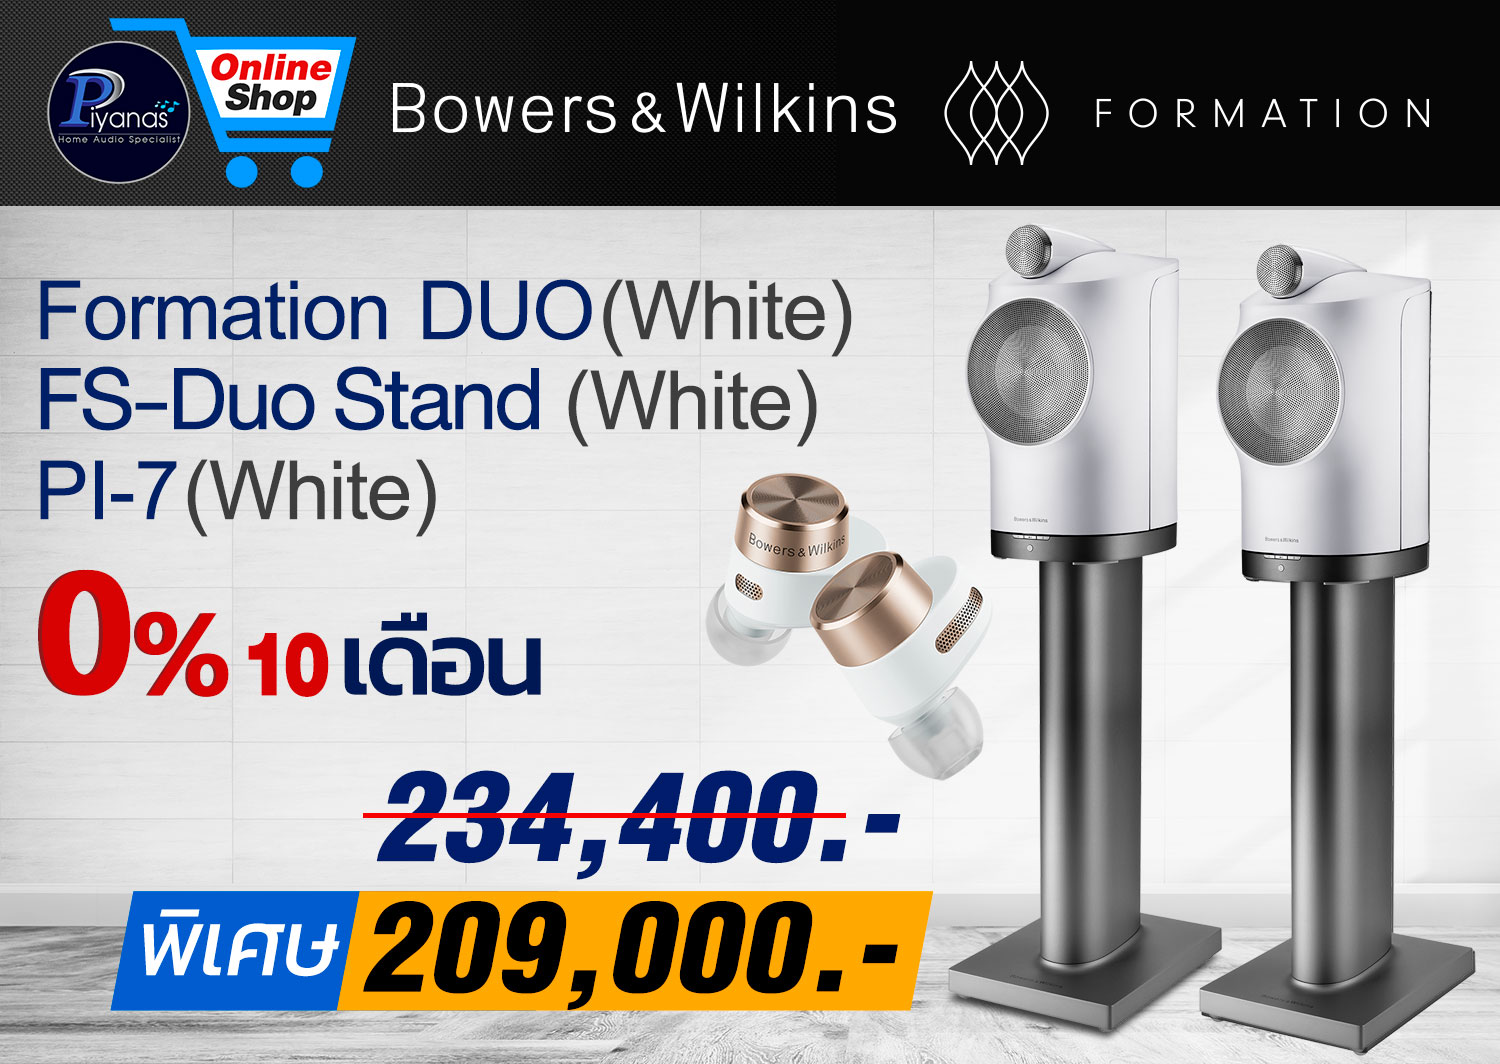 Formation DUO (White)
FS-Duo Stand (White) PI-7 (White)